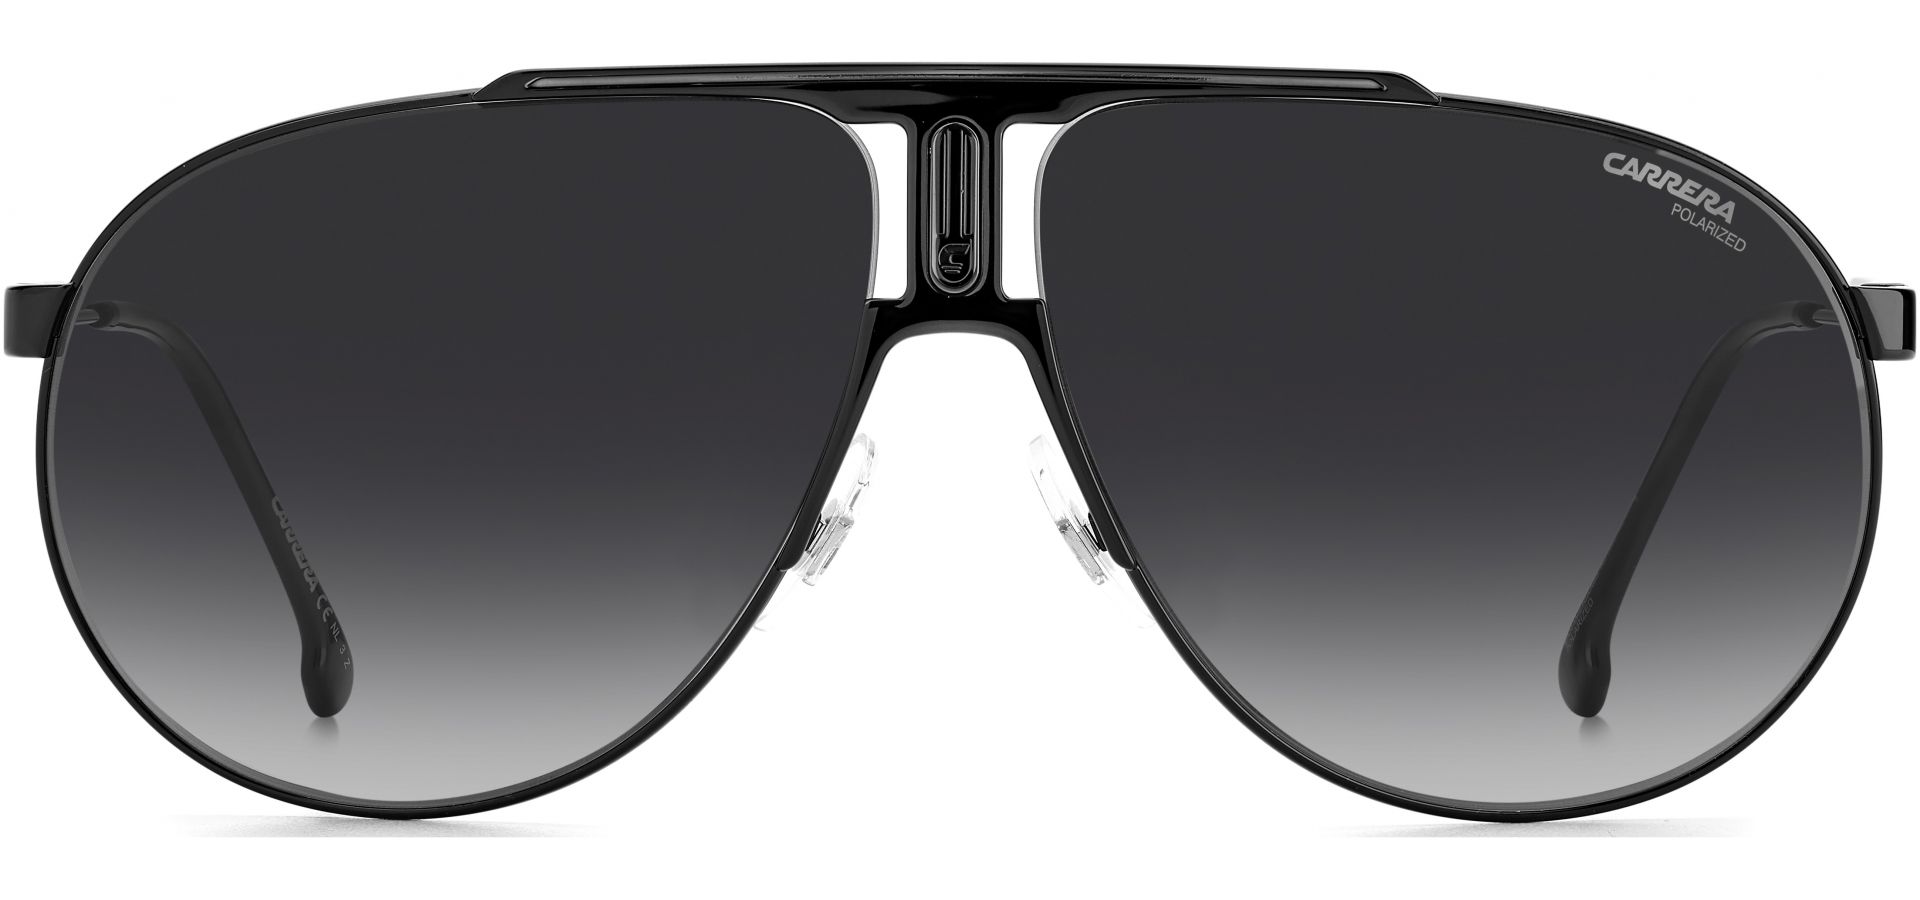 Sunčane naočale Carrera CARRERA PANAMERIKA65: Boja: Black, Veličina: 1, Spol: unisex, Materijal: metal